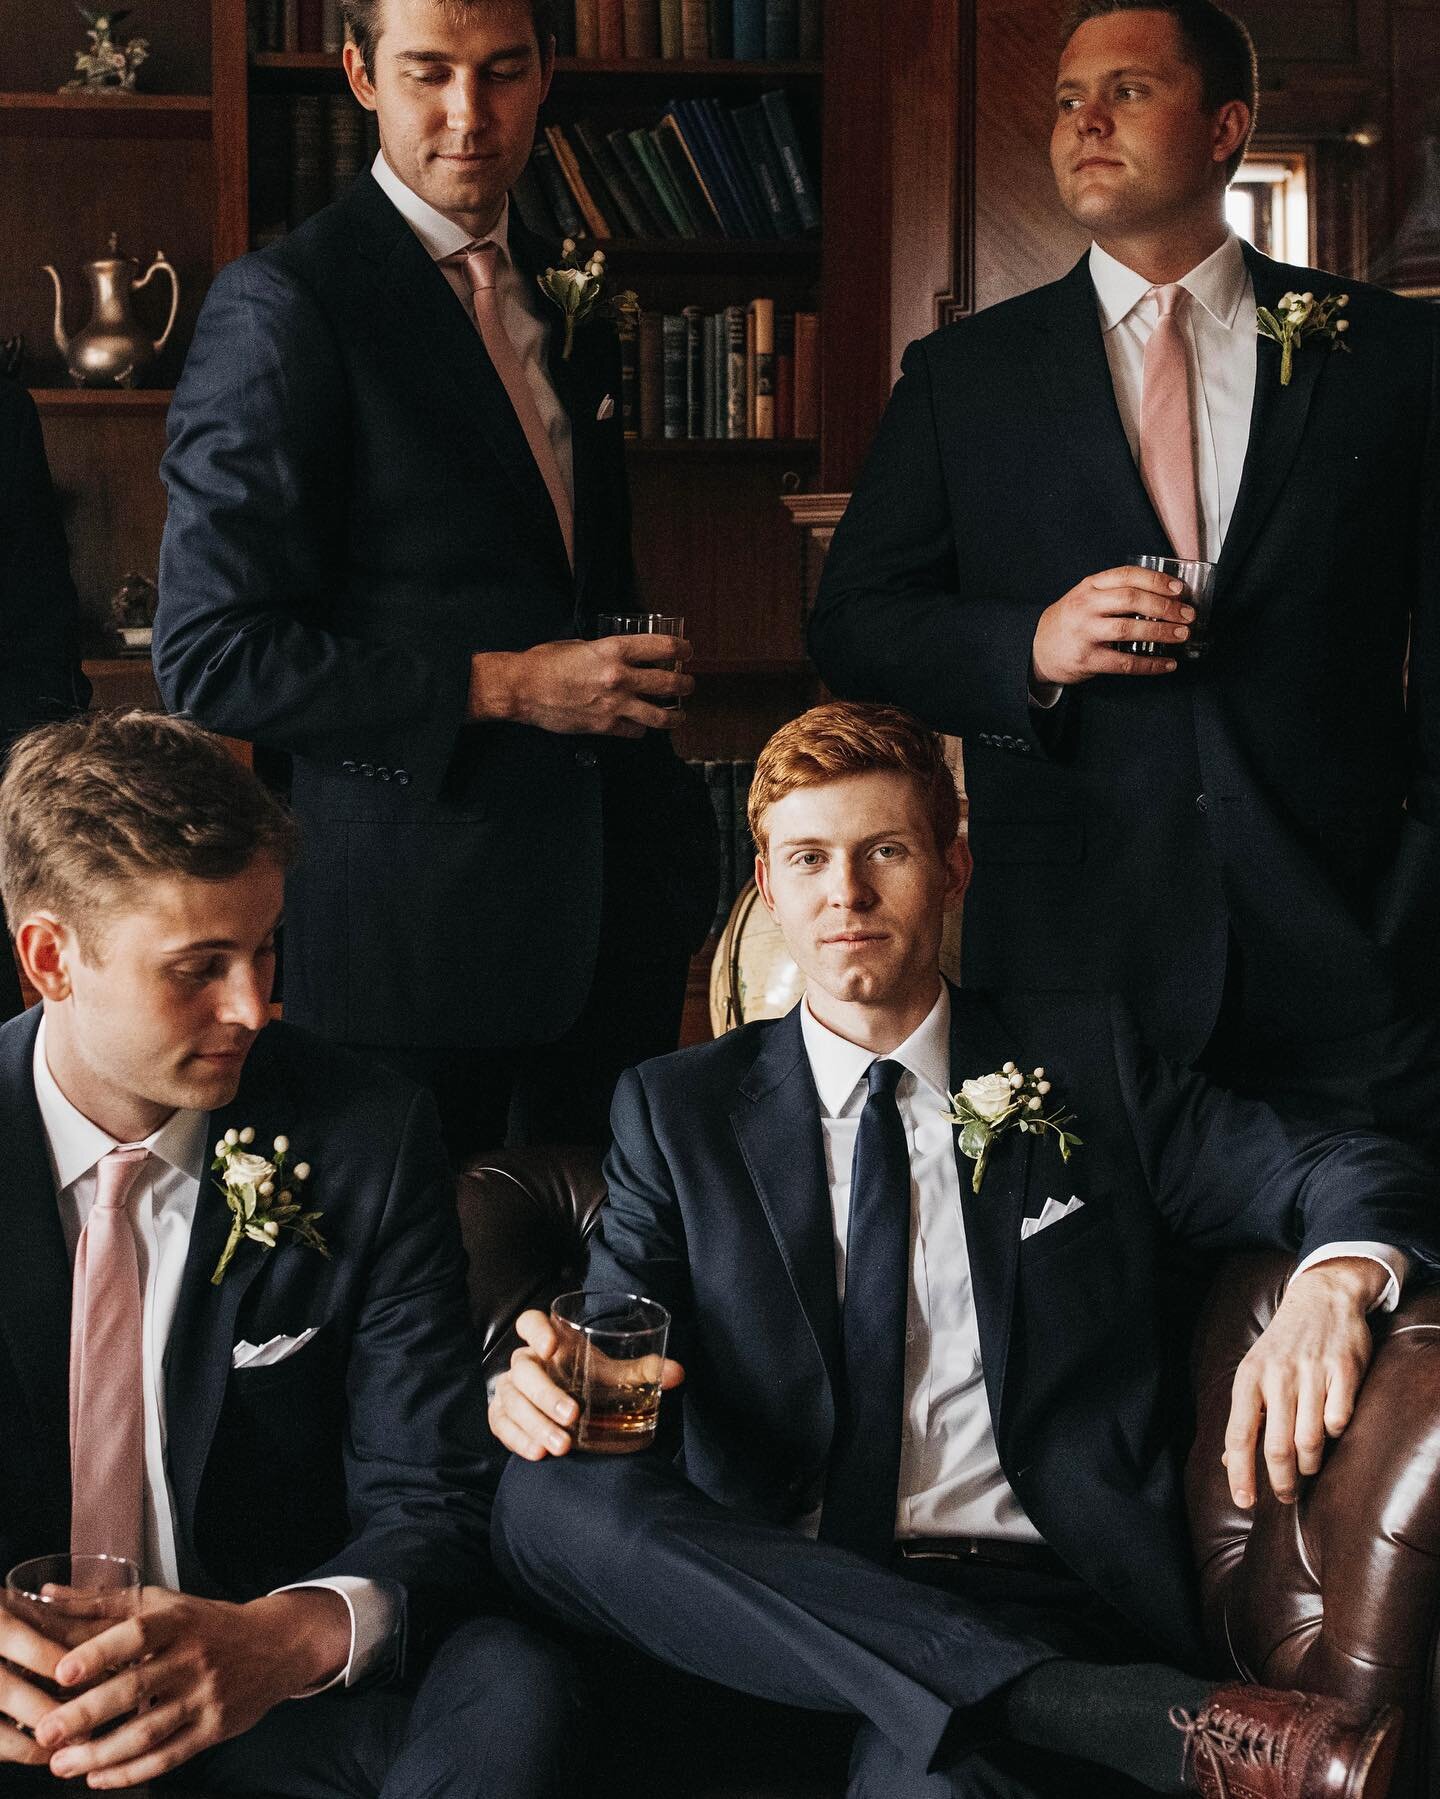 These groomsmen knew the assignment. 

#downtonabbey #vibes #groom #groomsmen #maywedding 

@eventsatfelt